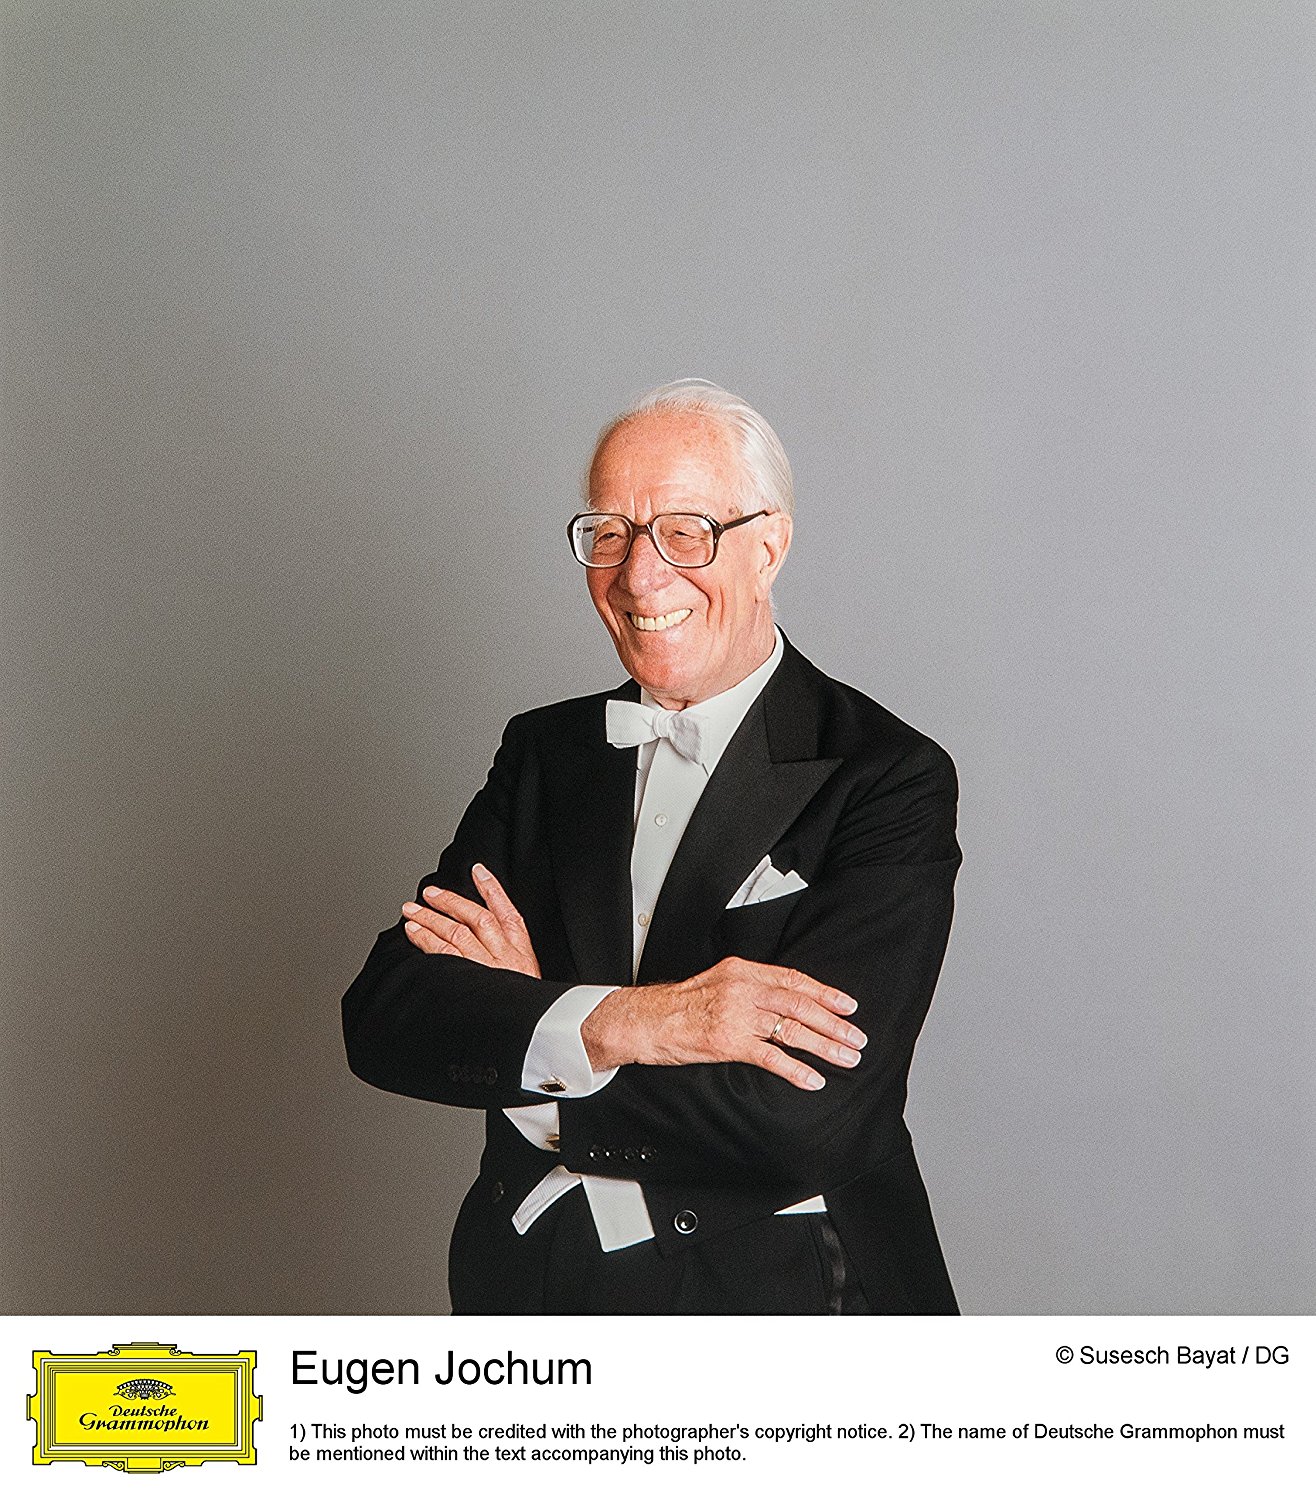 Complete Recordings On Deutsche Grammophon vol. 2 | Eugen Jochum carturesti.ro poza noua